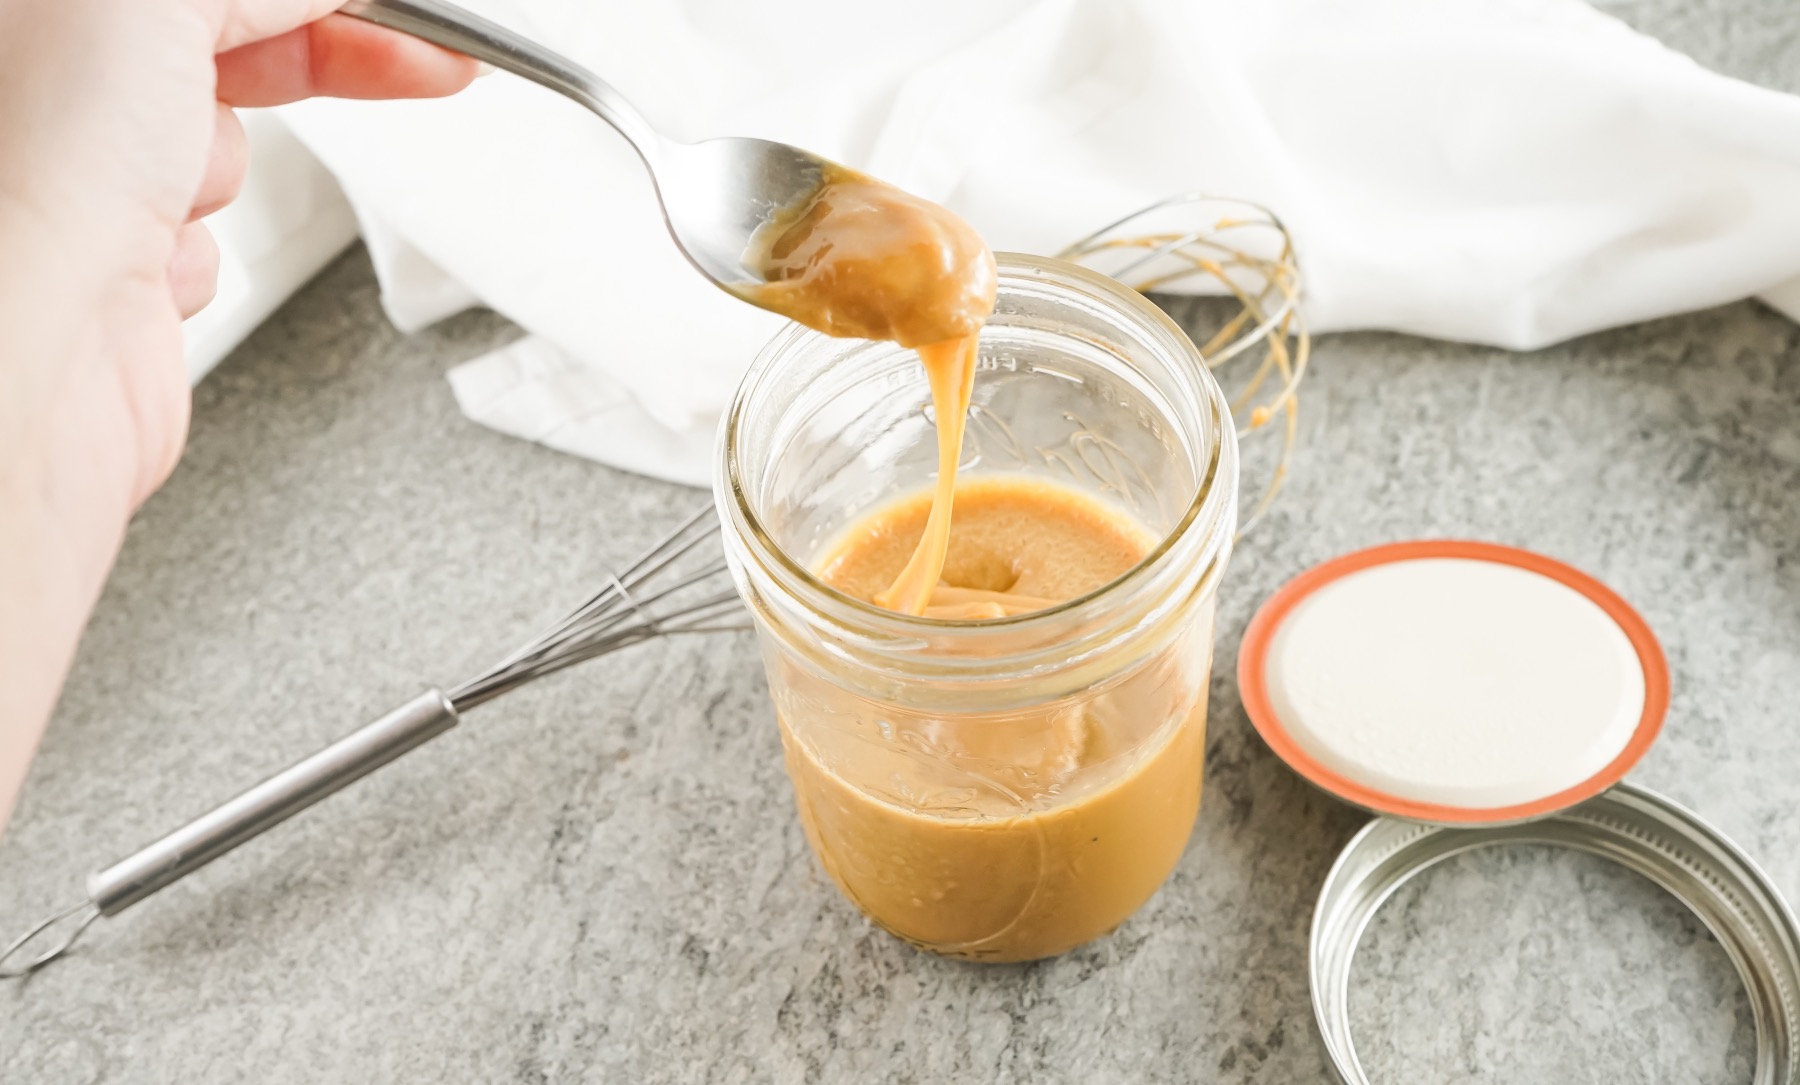 stir the dulce de leche until creamy recipe instructions